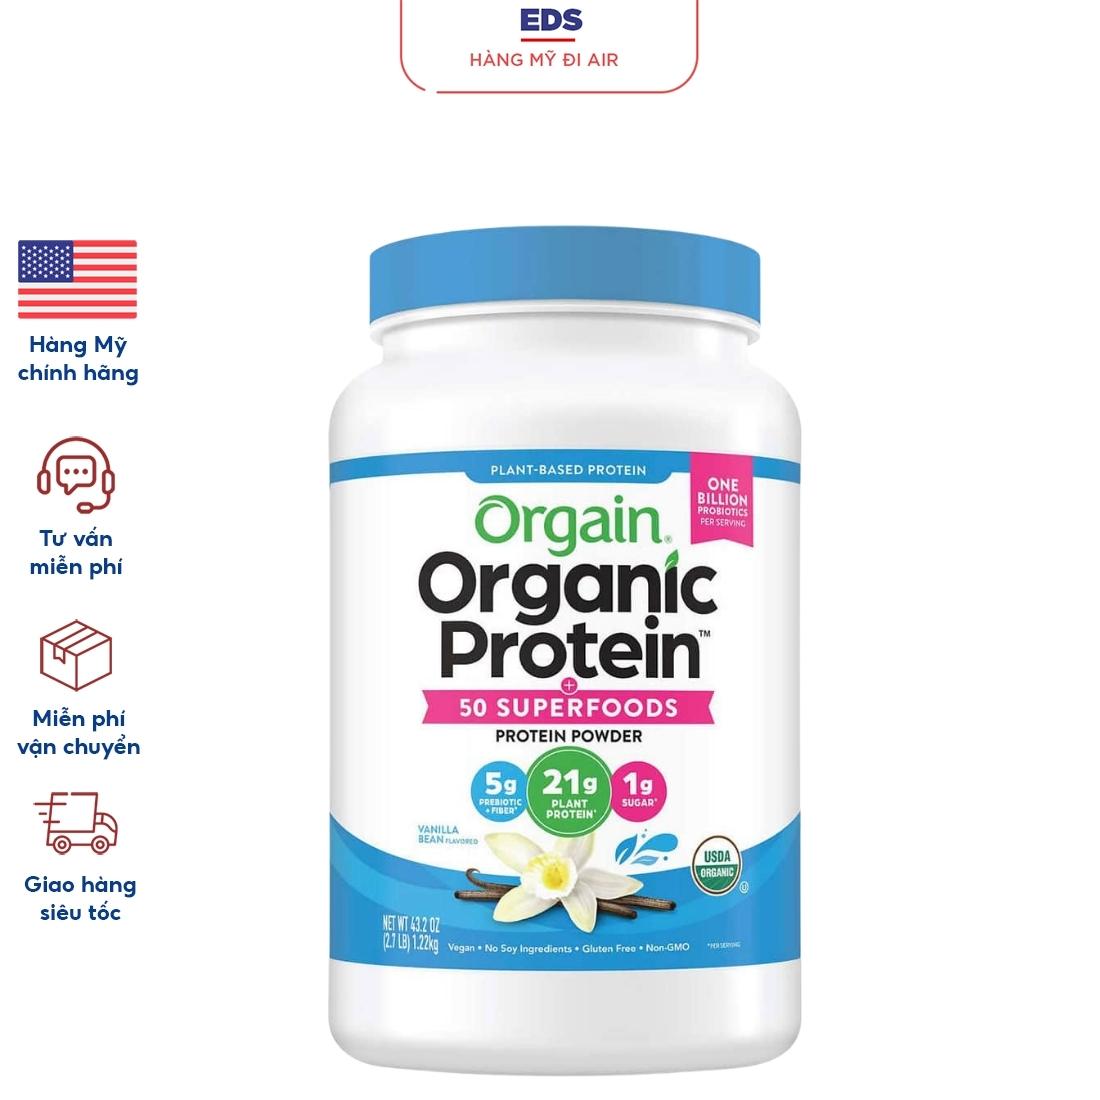 Bột protein hữu cơ Orgain Organic Protein date 8/2025 - EDS Hàng Mỹ